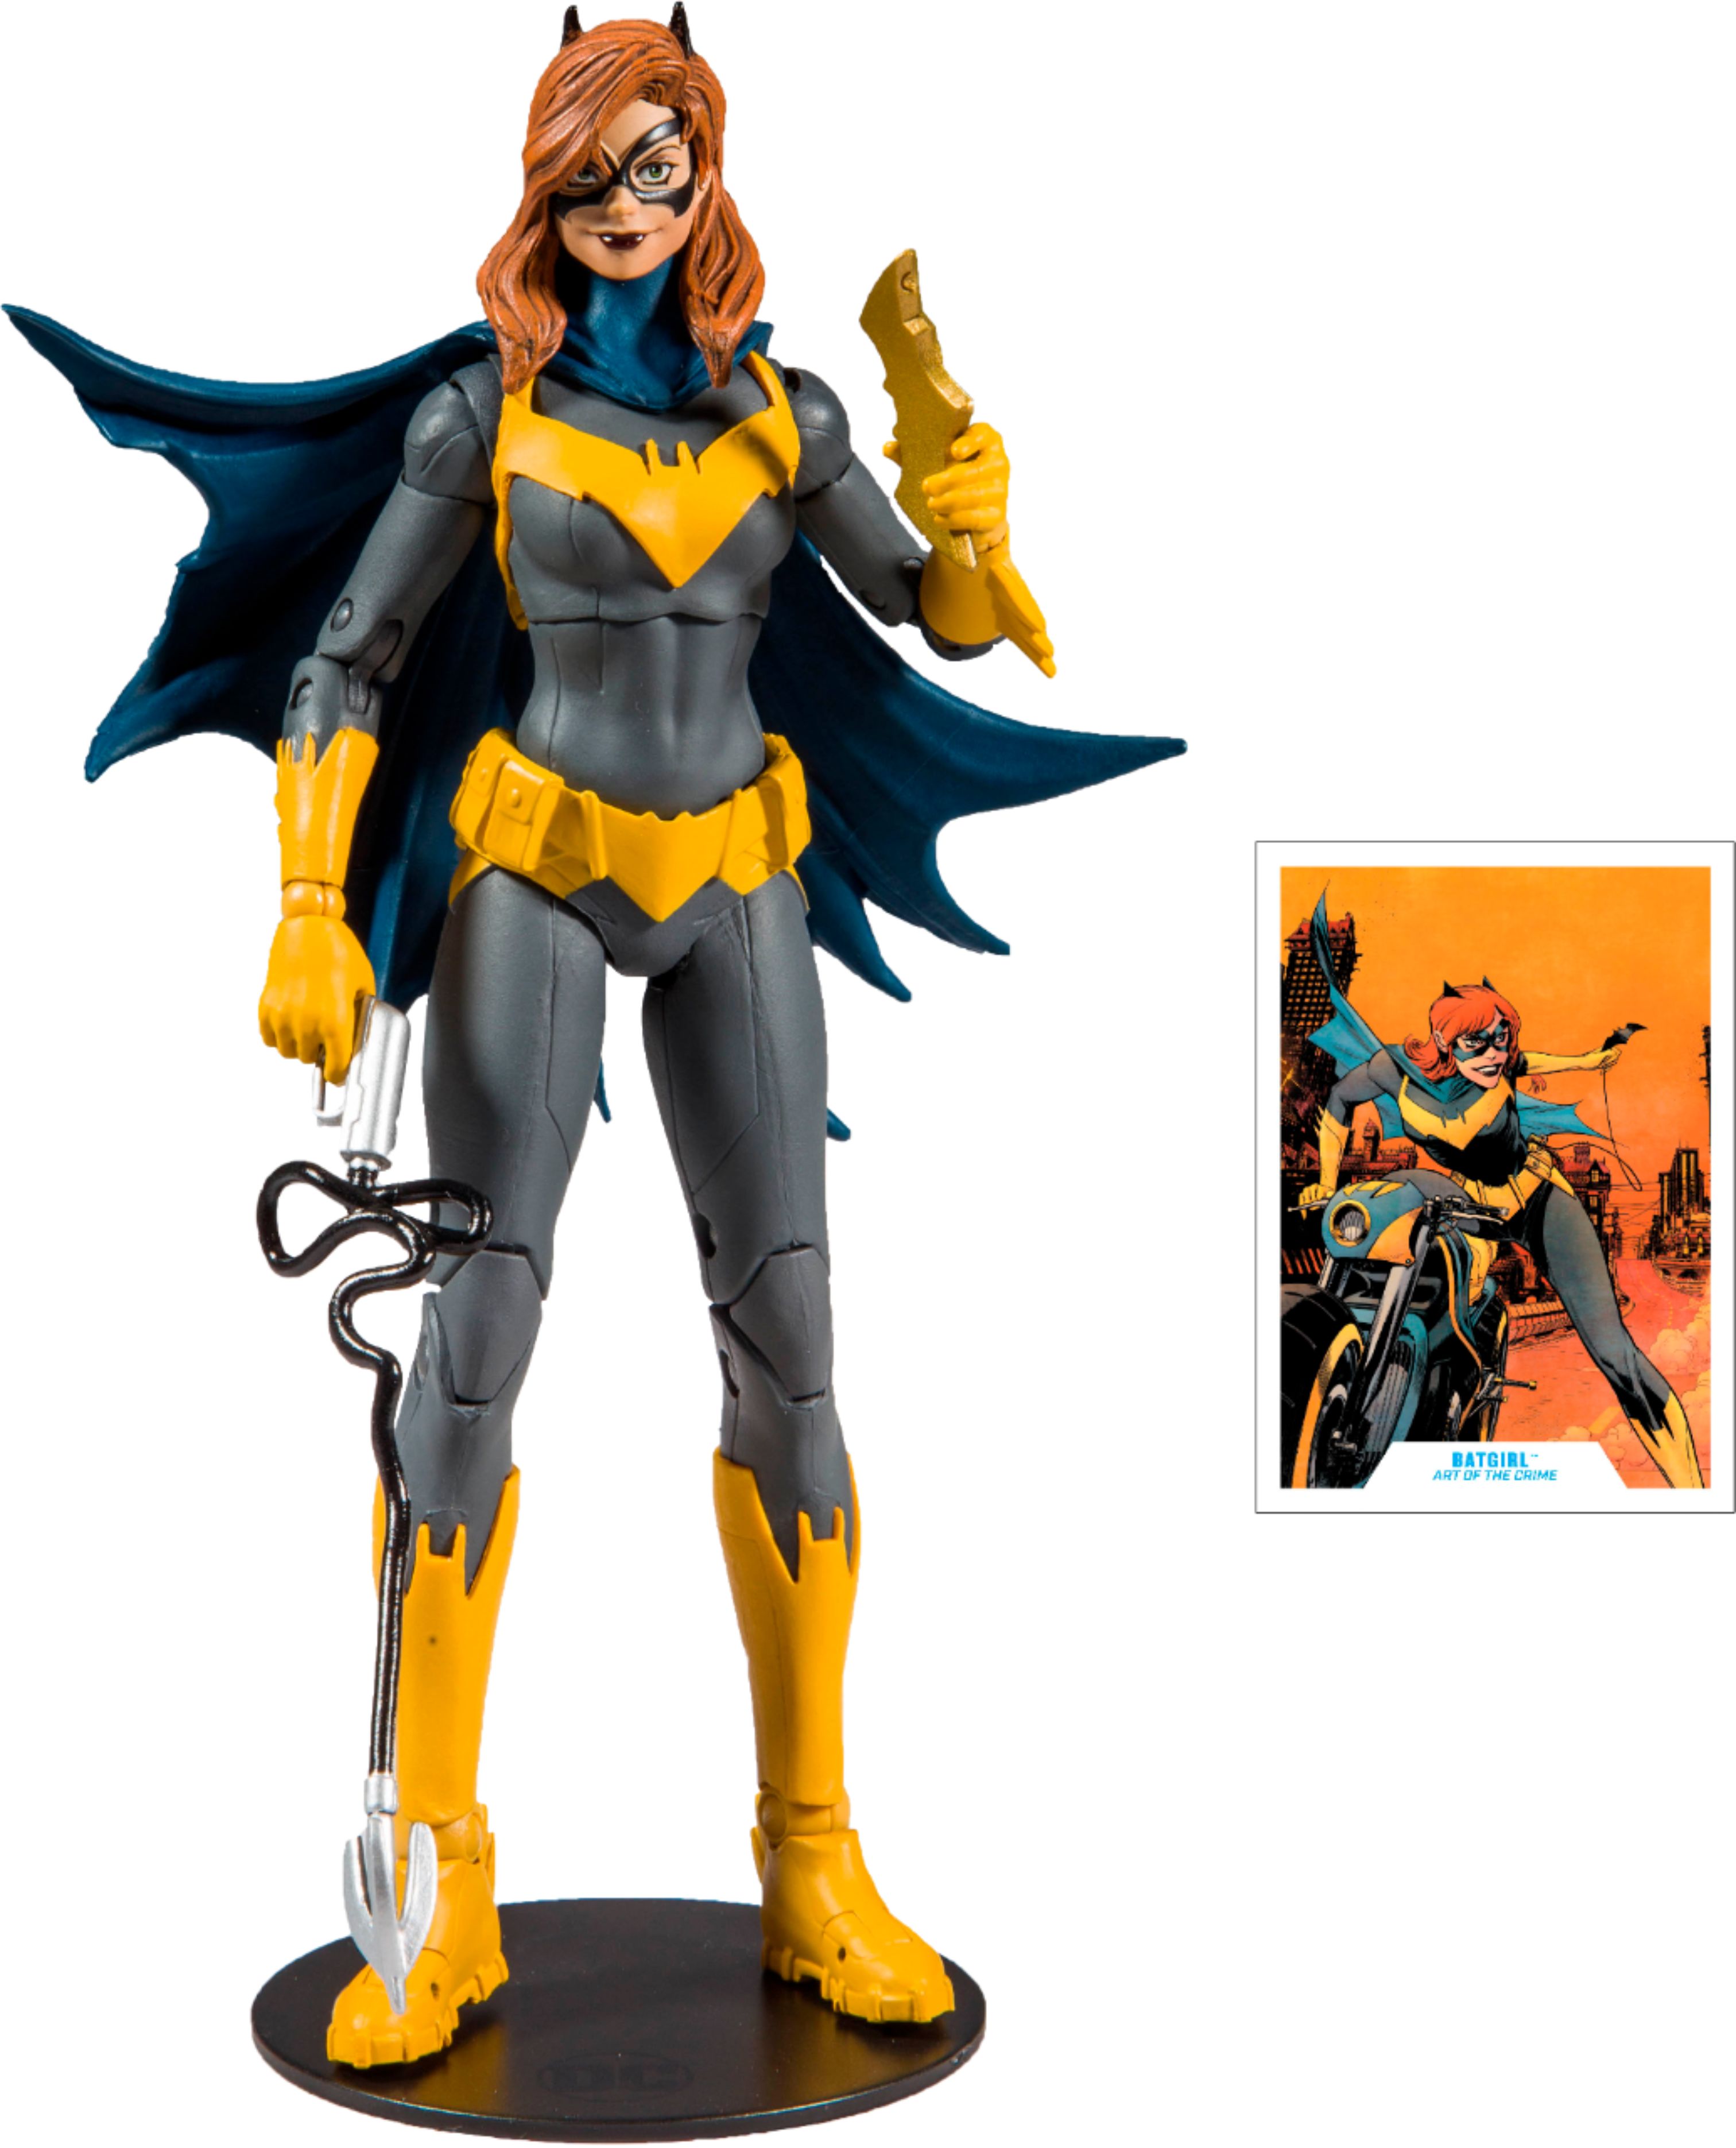 Best Buy: McFarlane Toys DC Multiverse Modern Bat Girl 7